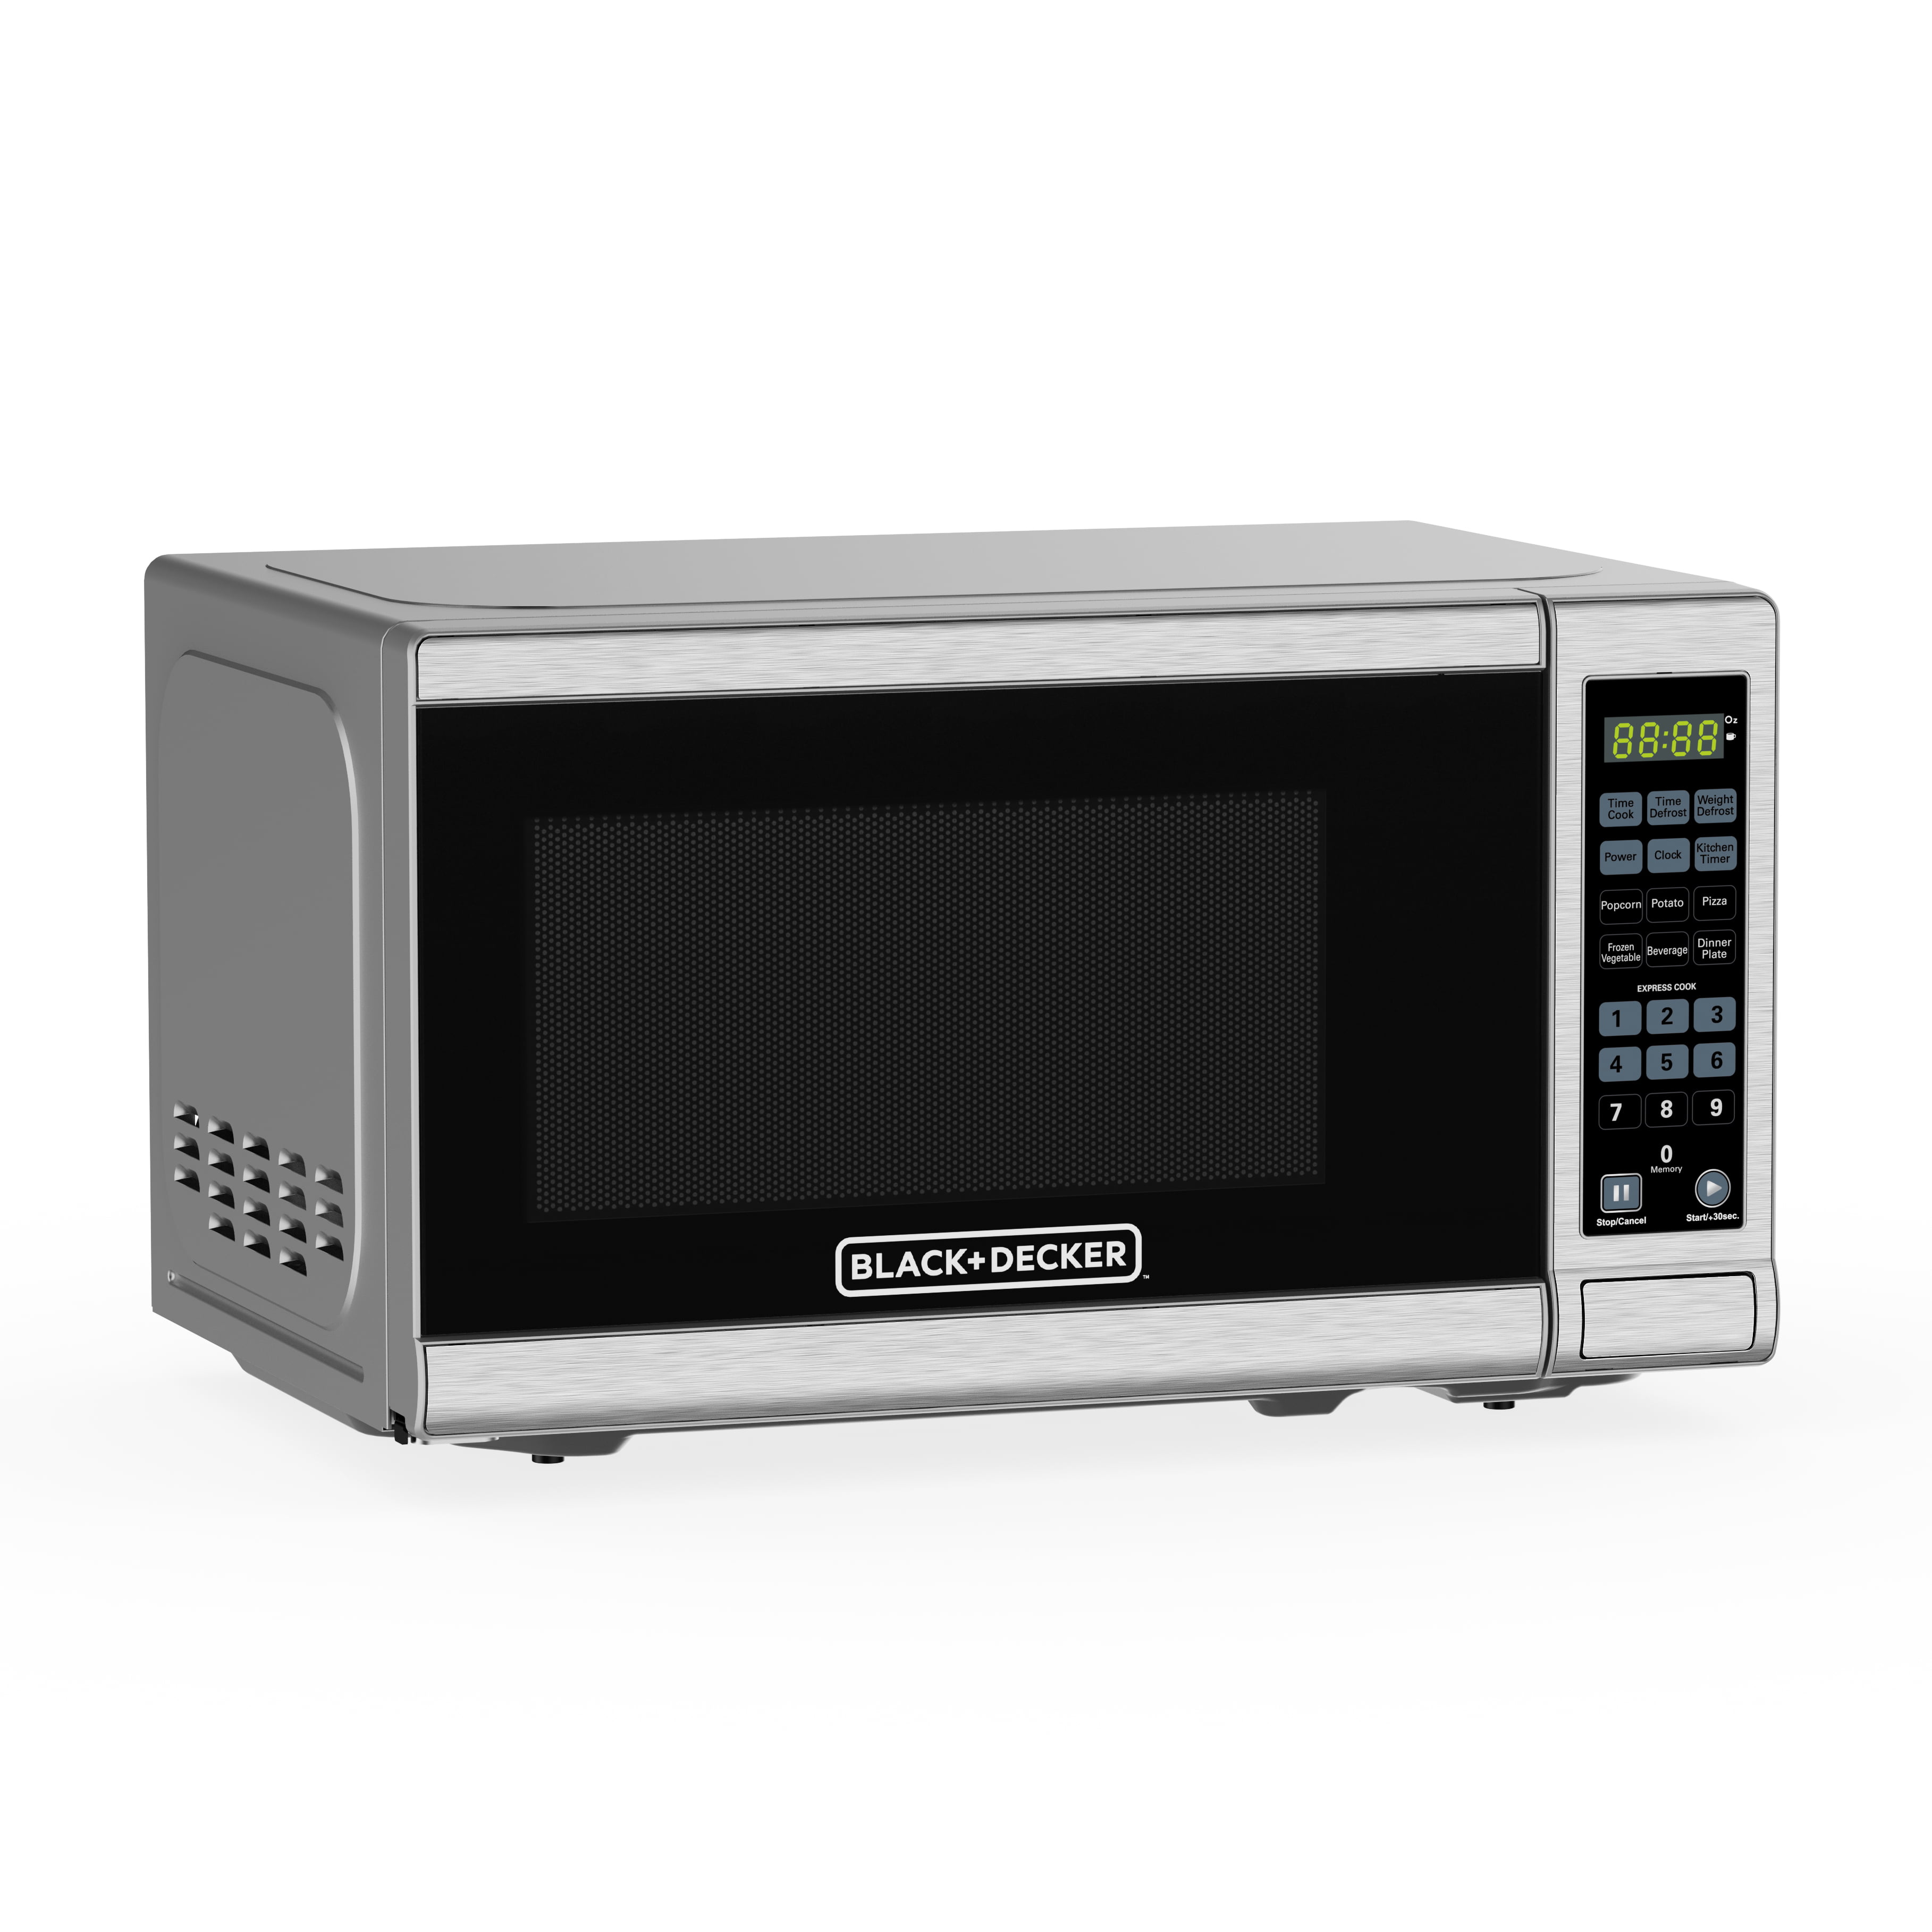 Like New BLACK DECKER Digital Microwave Oven $75 for Sale in